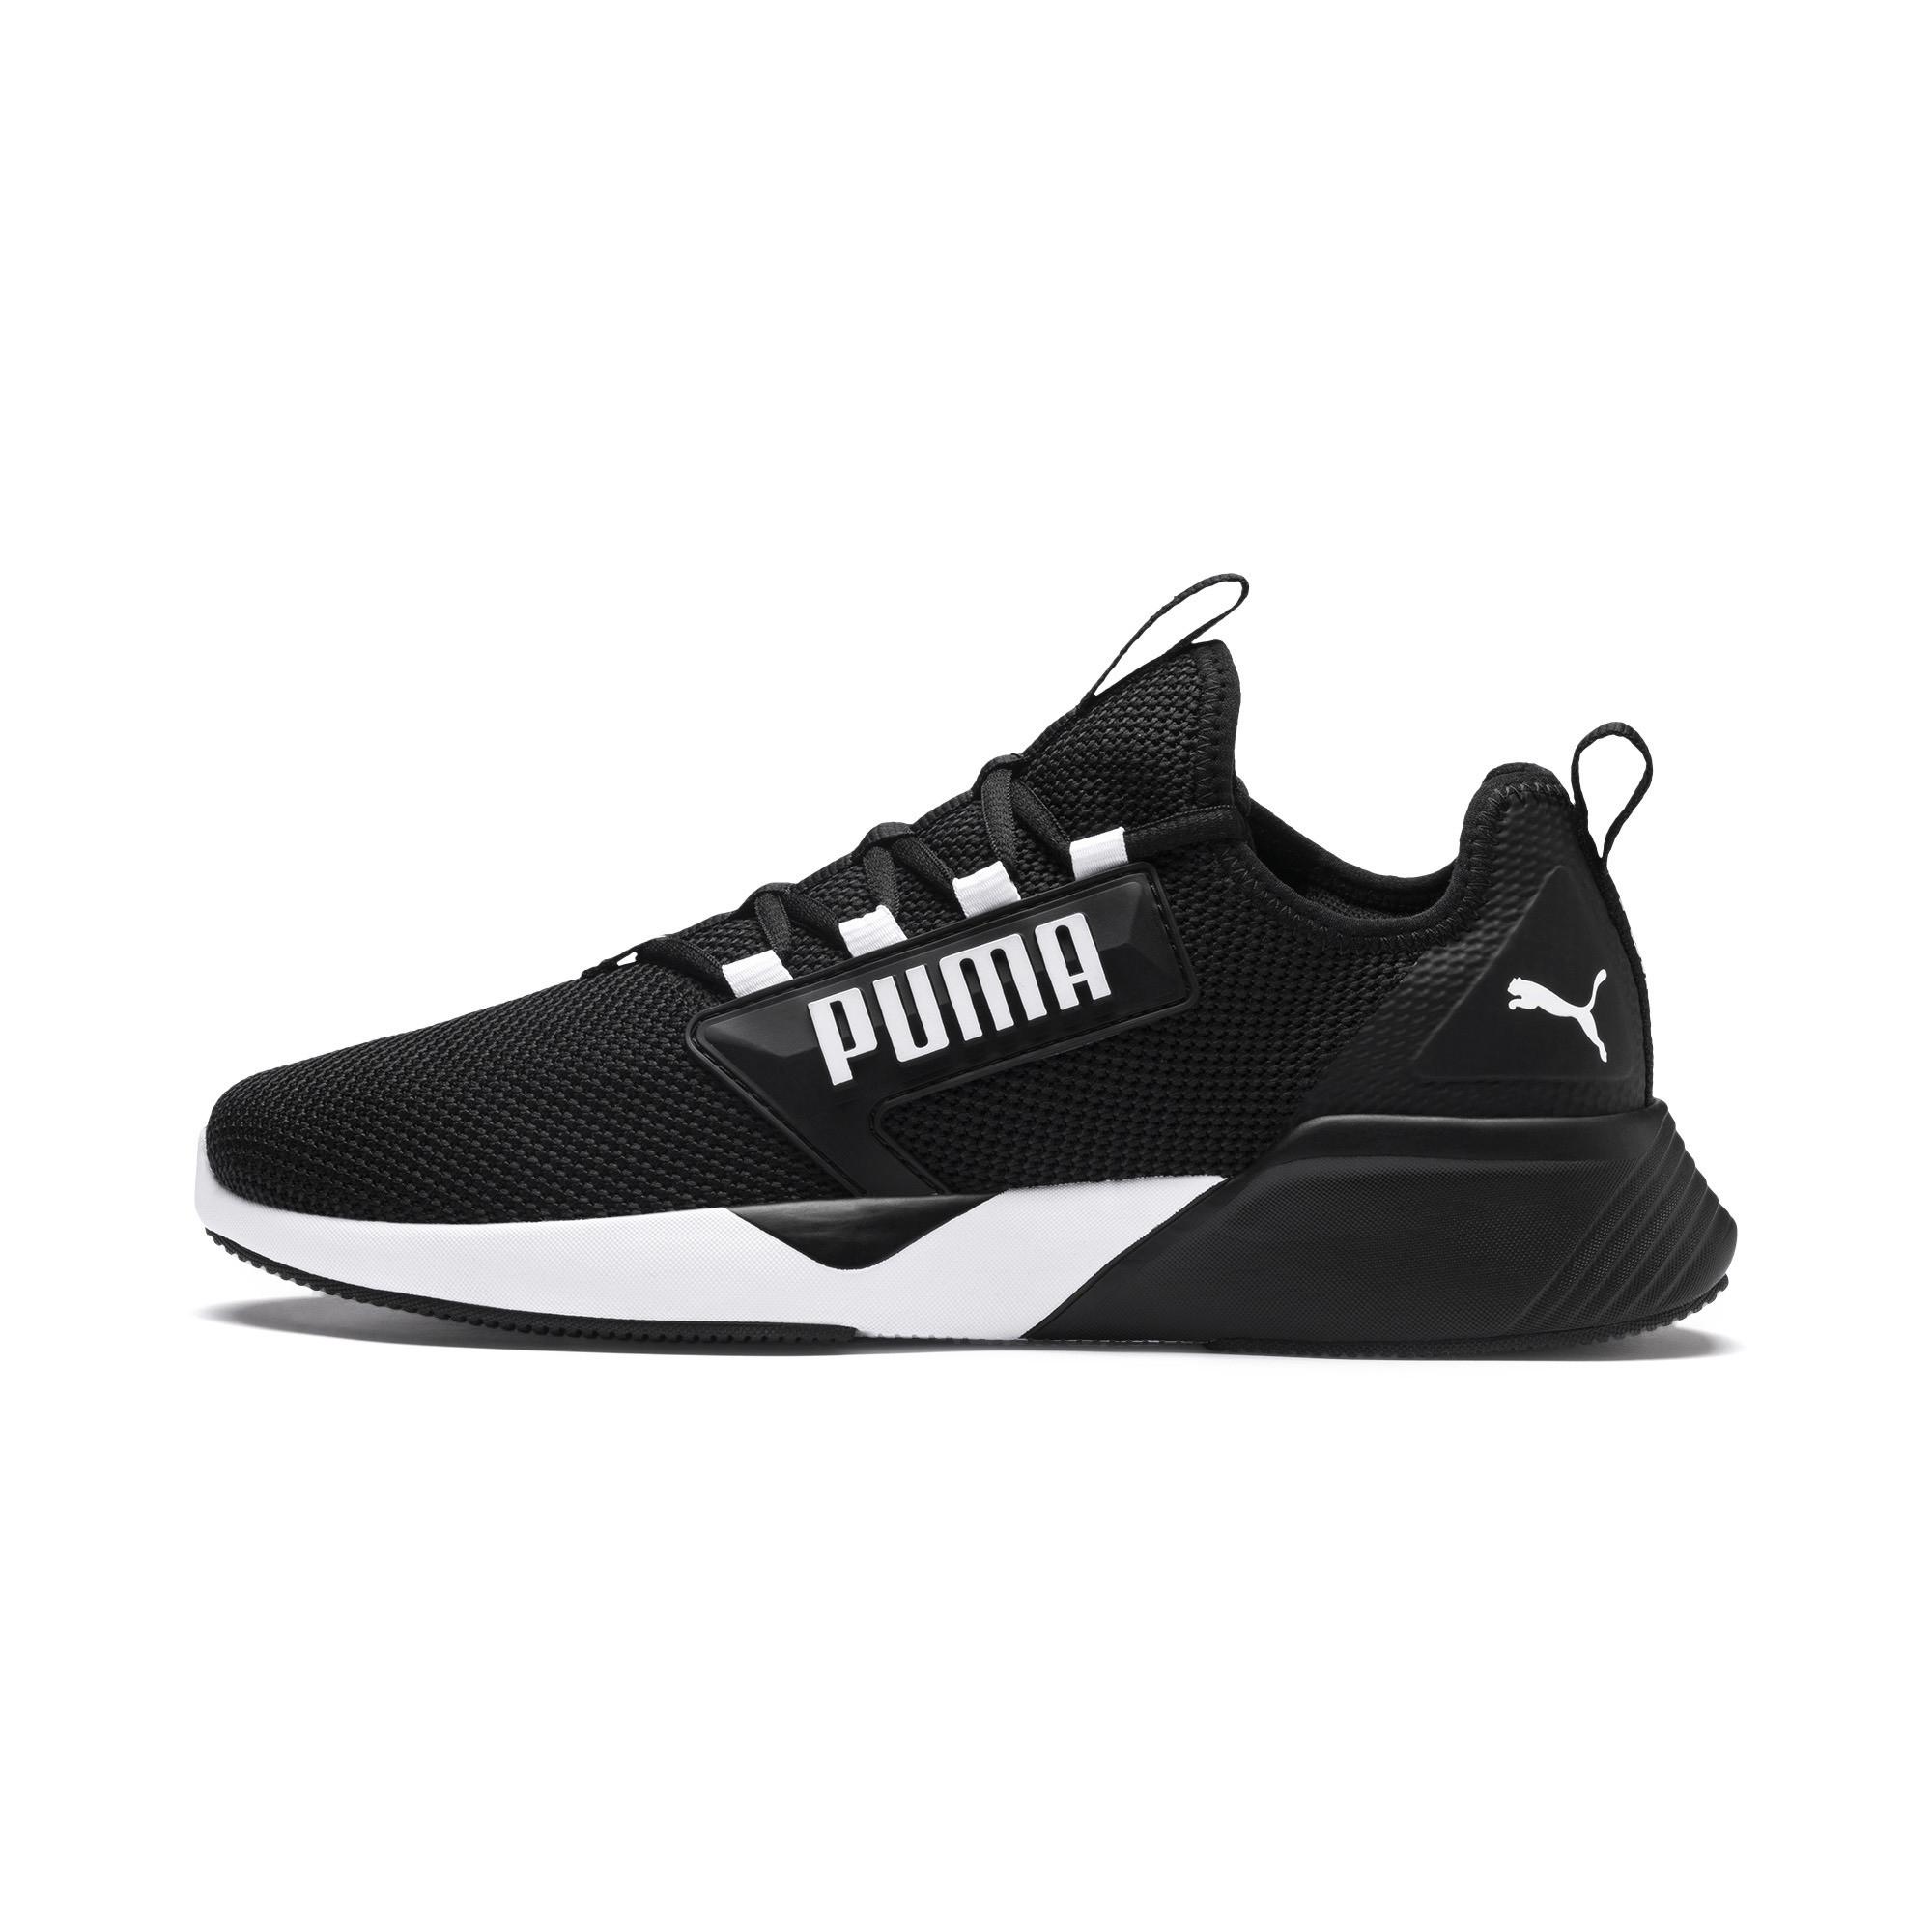 PUMA Retaliate Training Shoes in Black- White (Black) for Men - Lyst